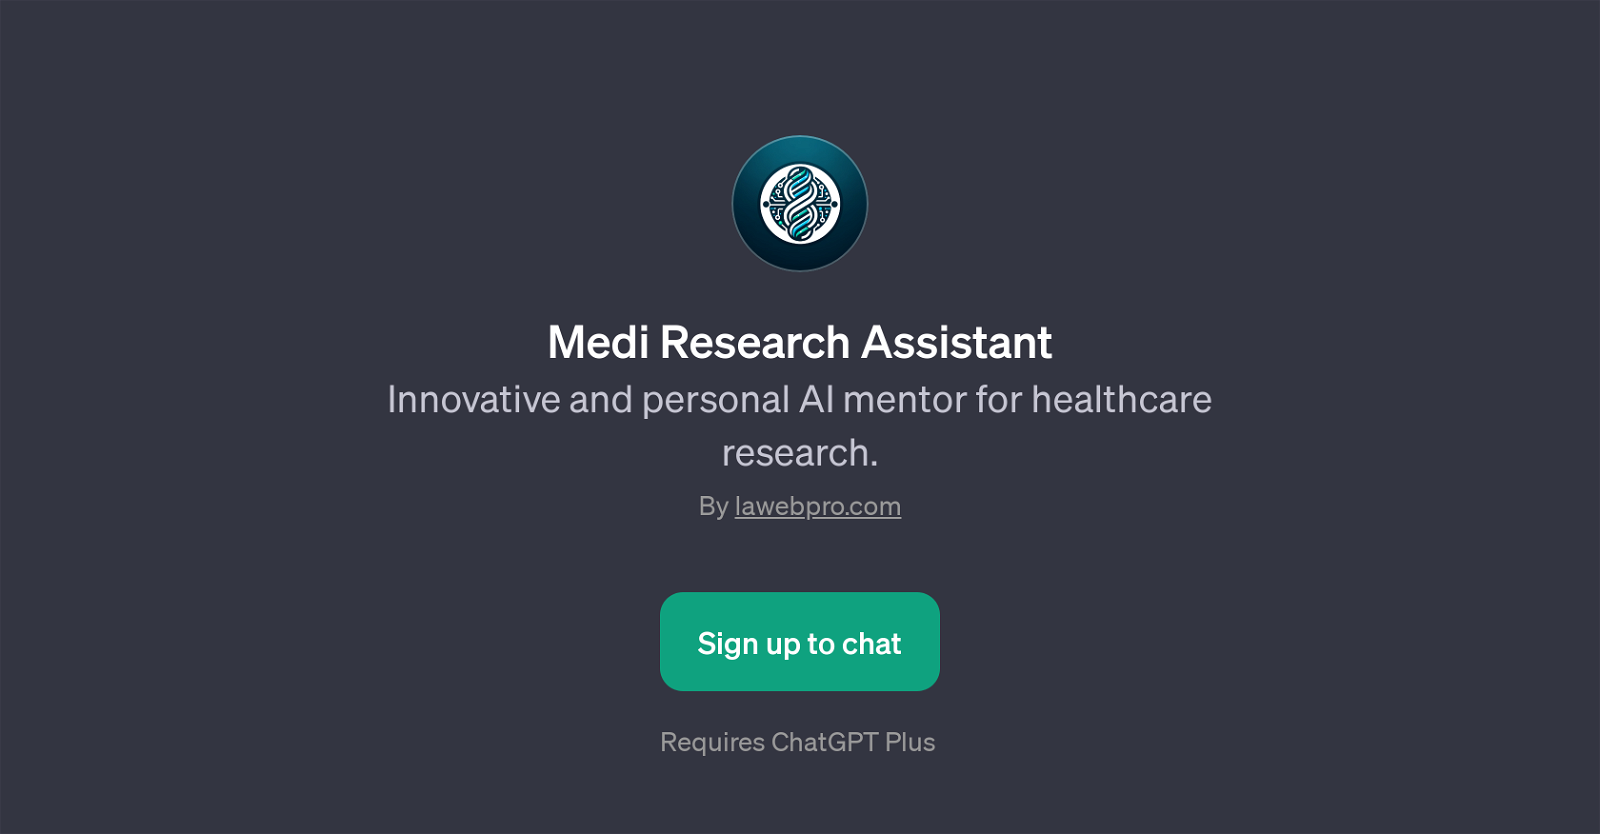 Medi Research Assistant website